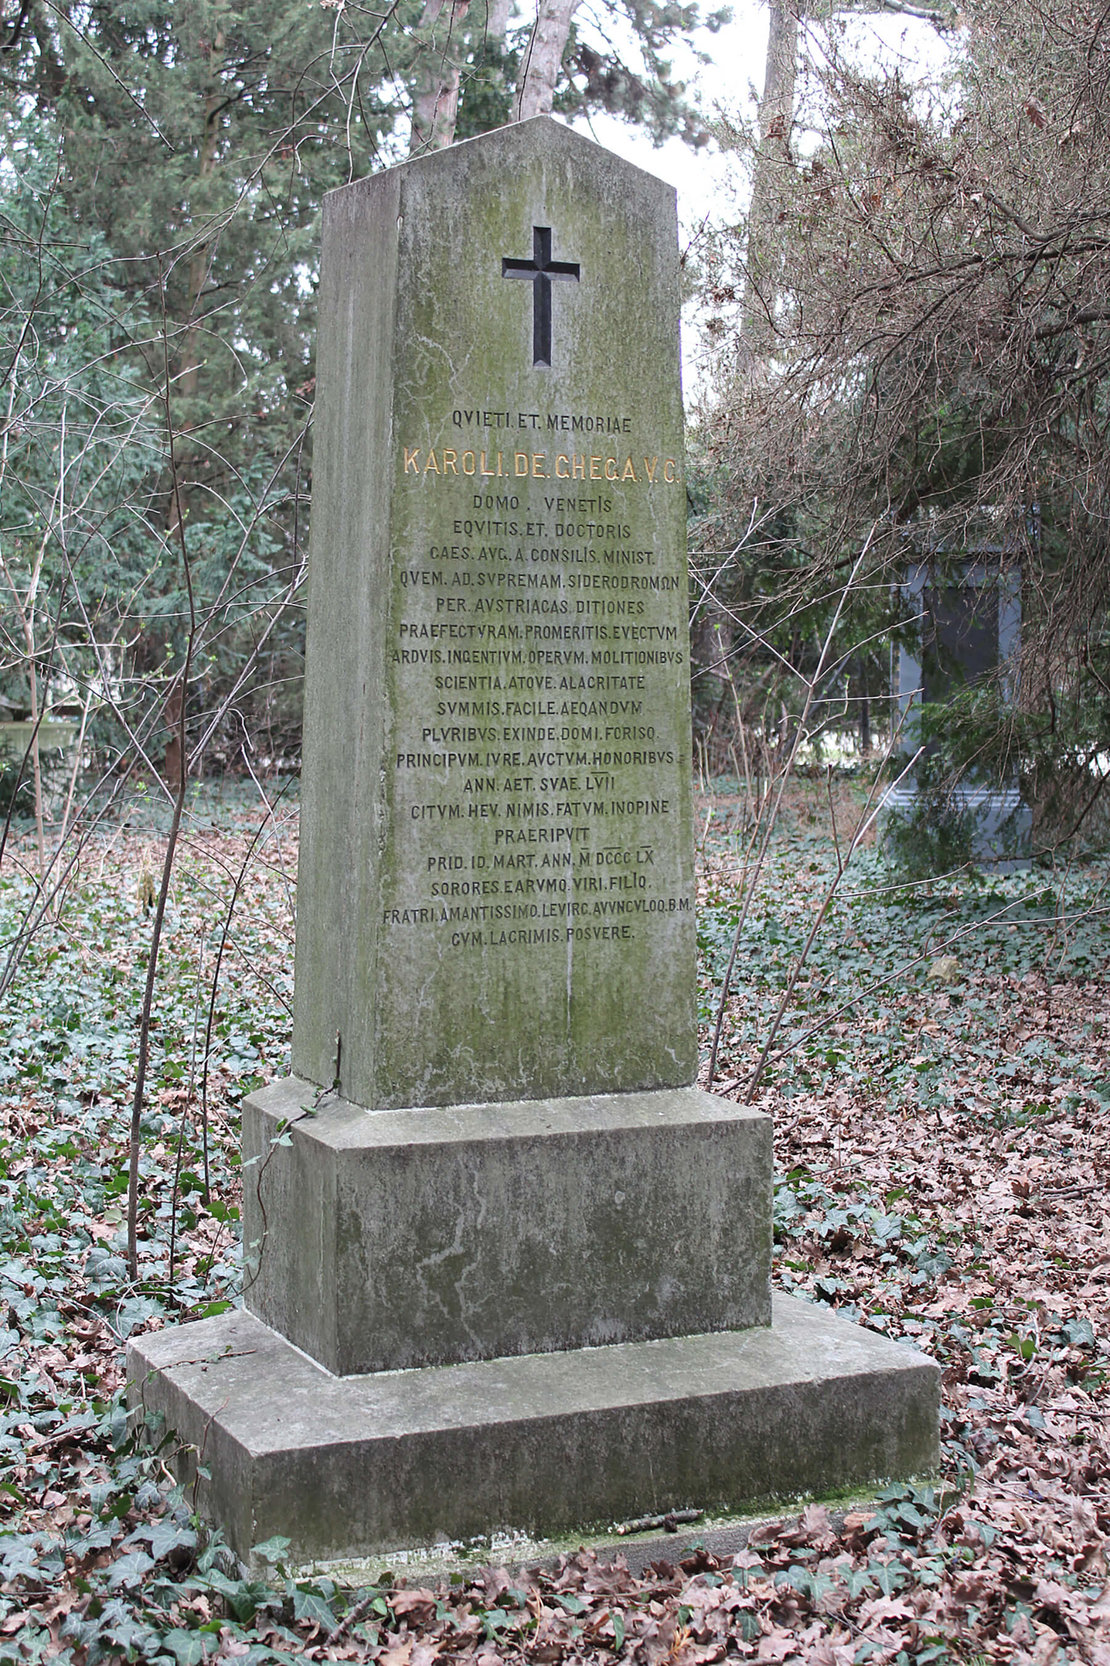 Das Grabdenkmal von Carlo Ghega (Carl Ritter von Ghega) im Gräberhain des Währinger Parks, Foto: Christian Hlavac 